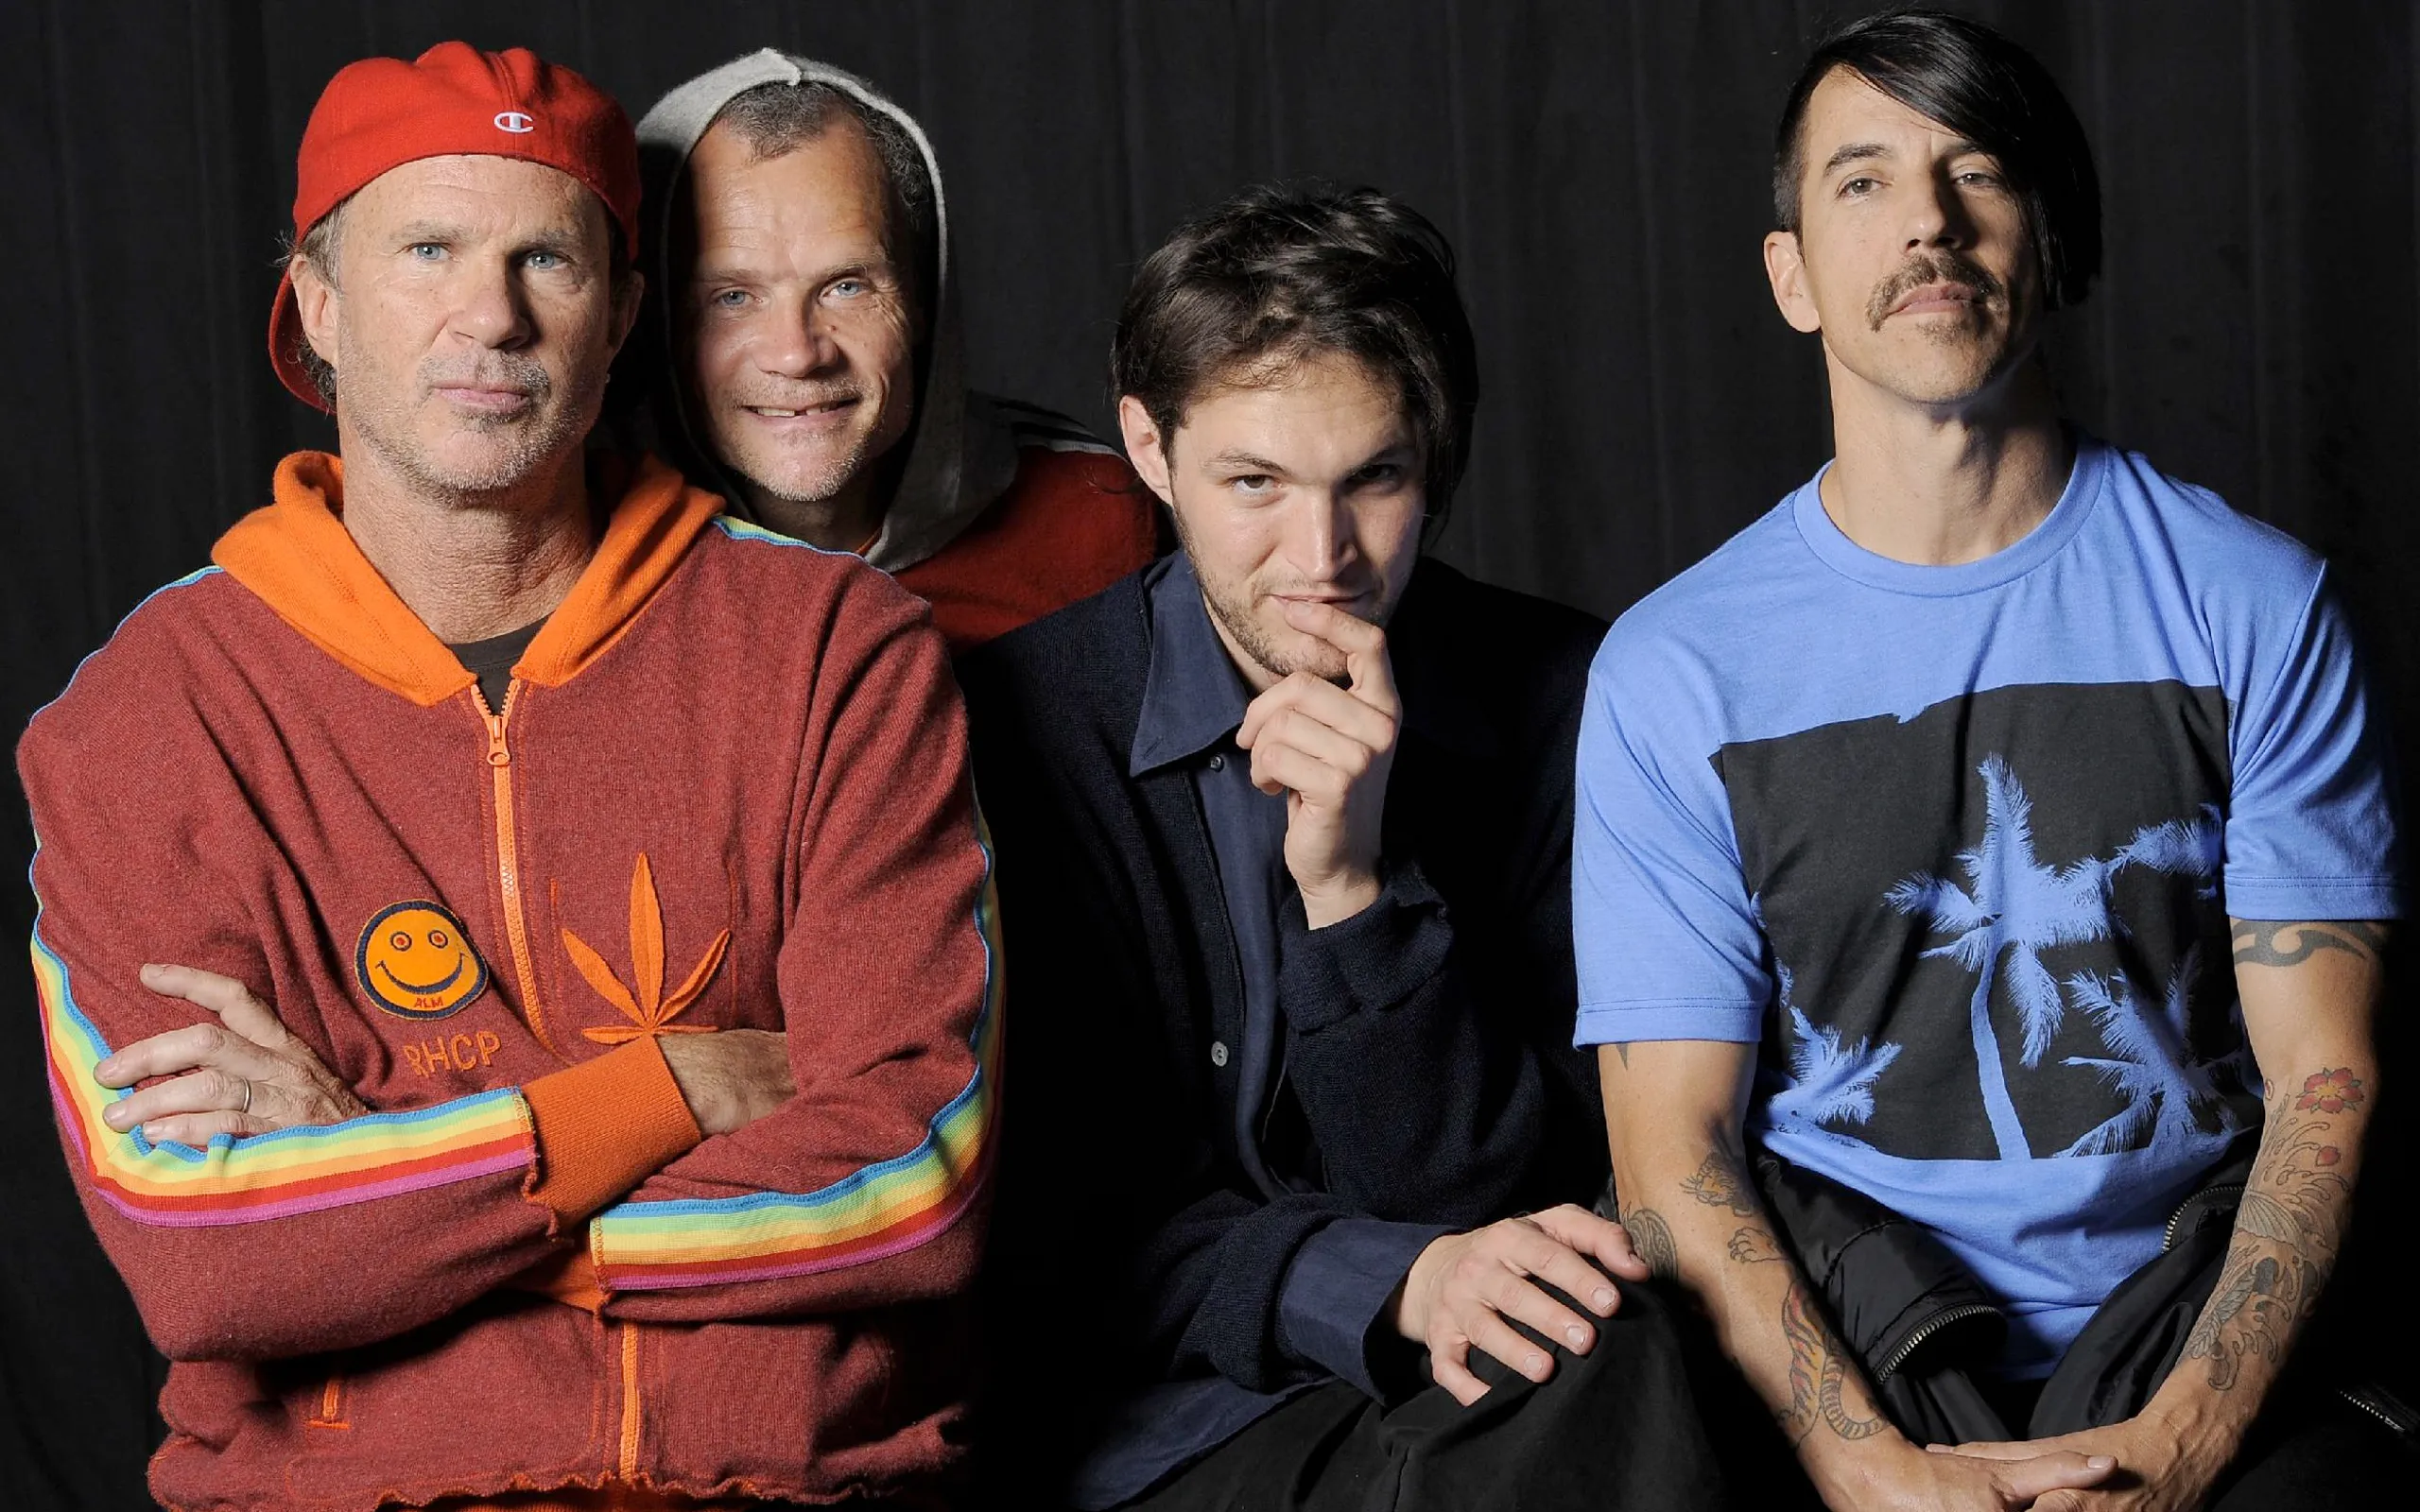 Pepper состав. Группа ред хот Чили пеперс. Группа Red hot Chili Peppers 2022. Ред хот Чили пеперс 2000. Барабанщик ред хот Чили пеперс.